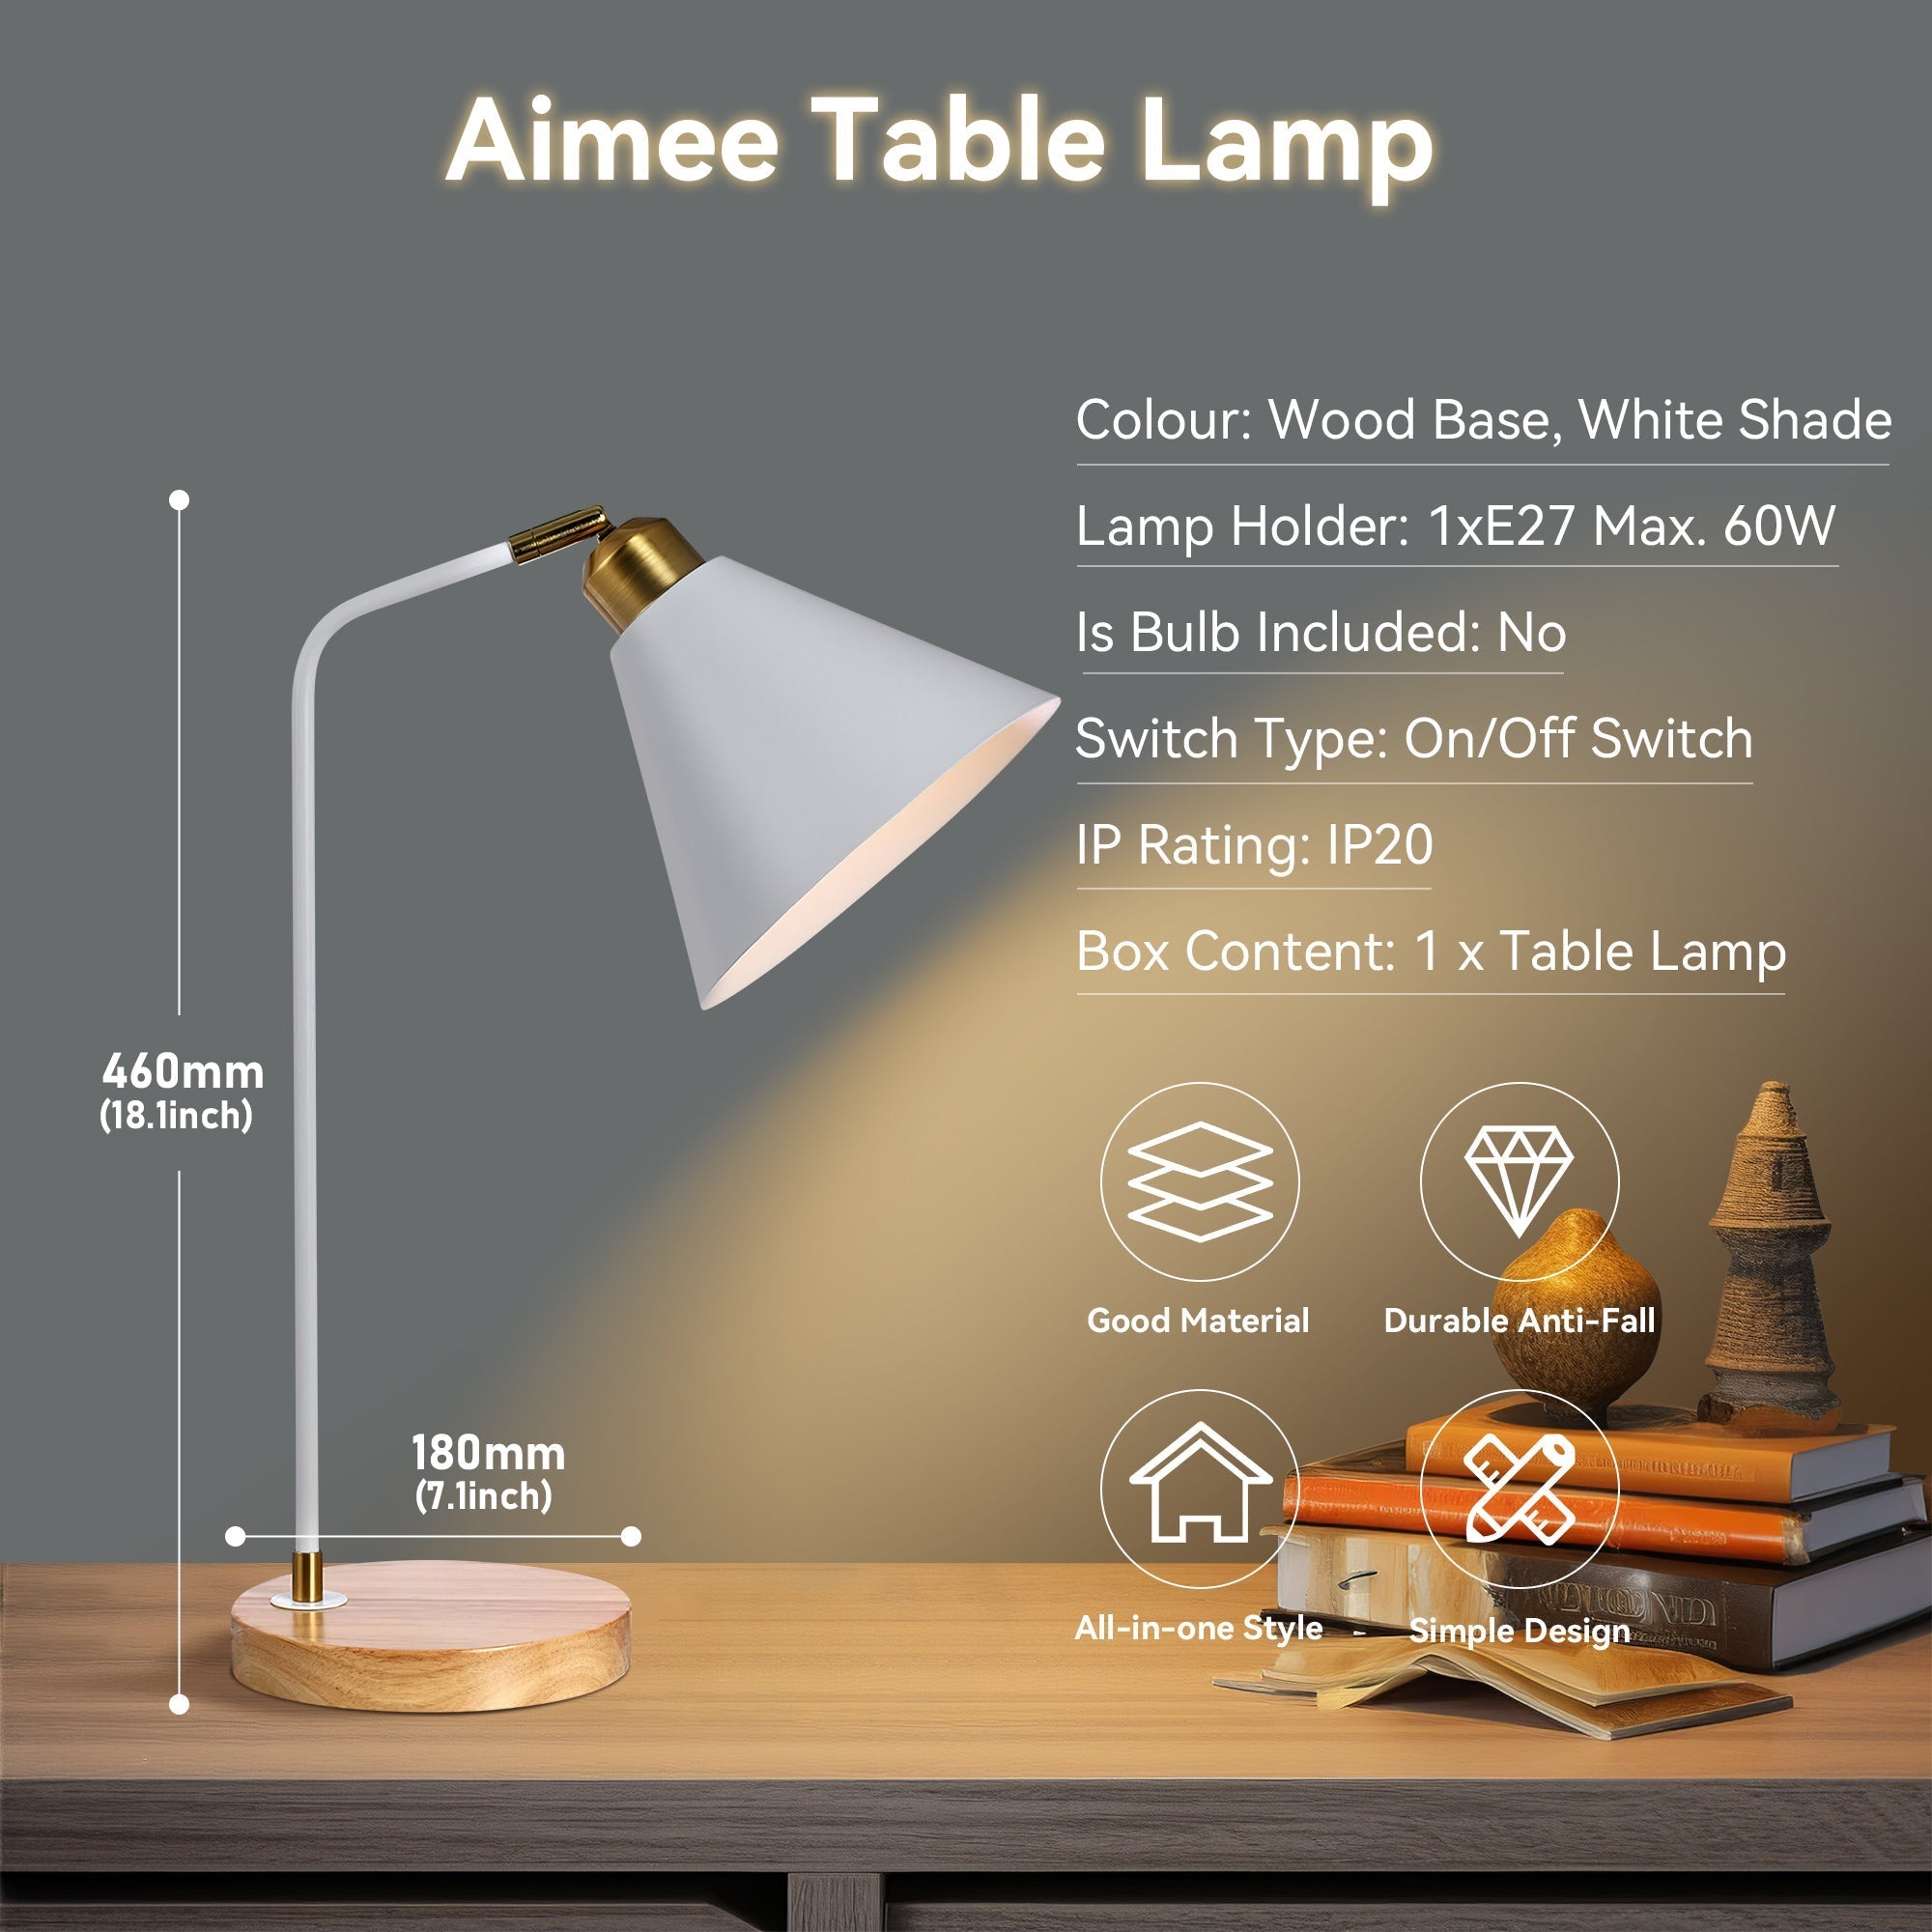 Aimee Table Lamp - White